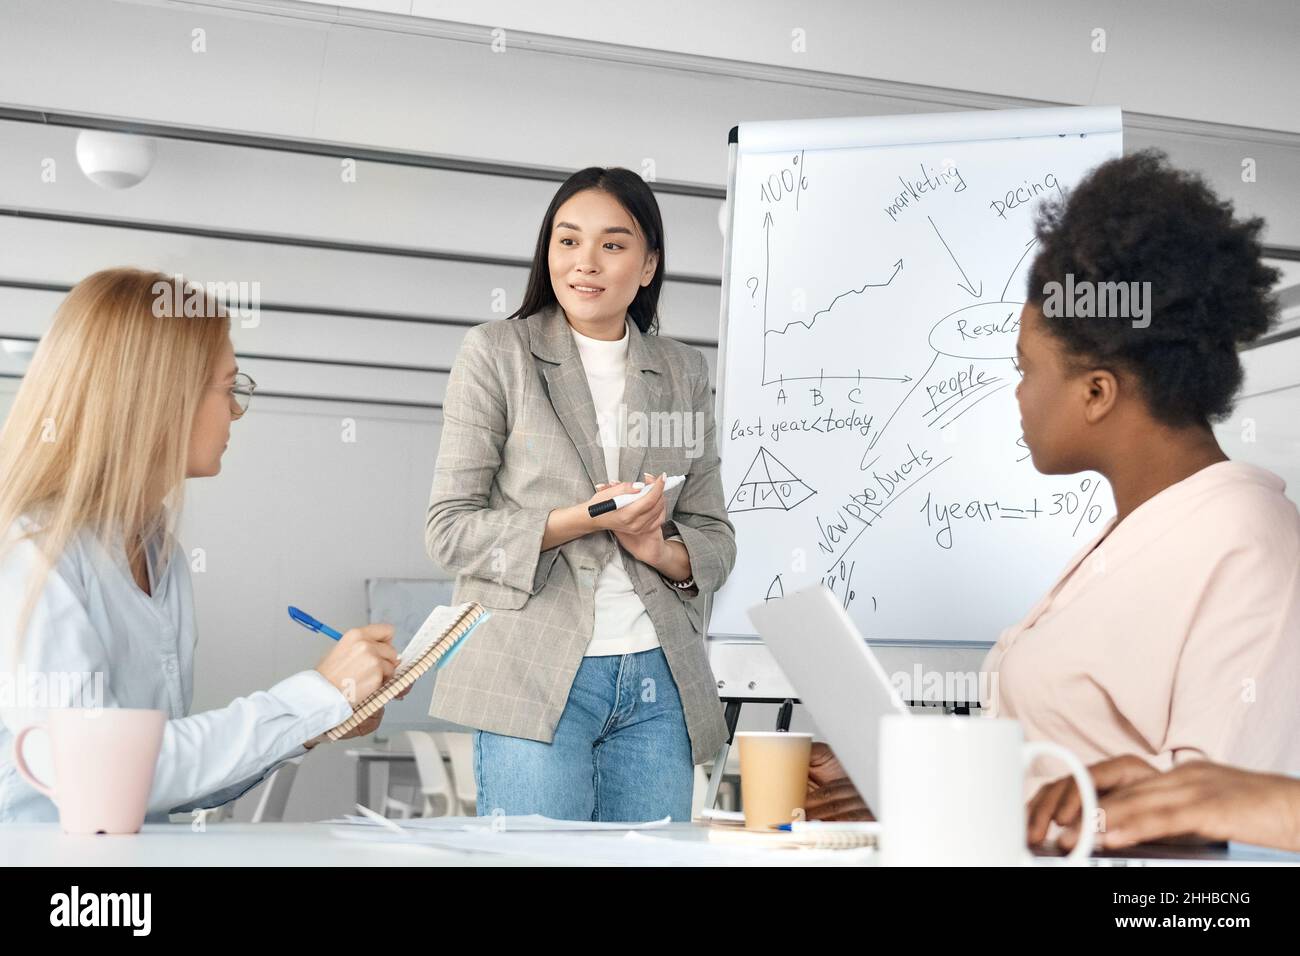 Asian woman explaining marketing plan standing at flipchart in meeting room Stock Photo